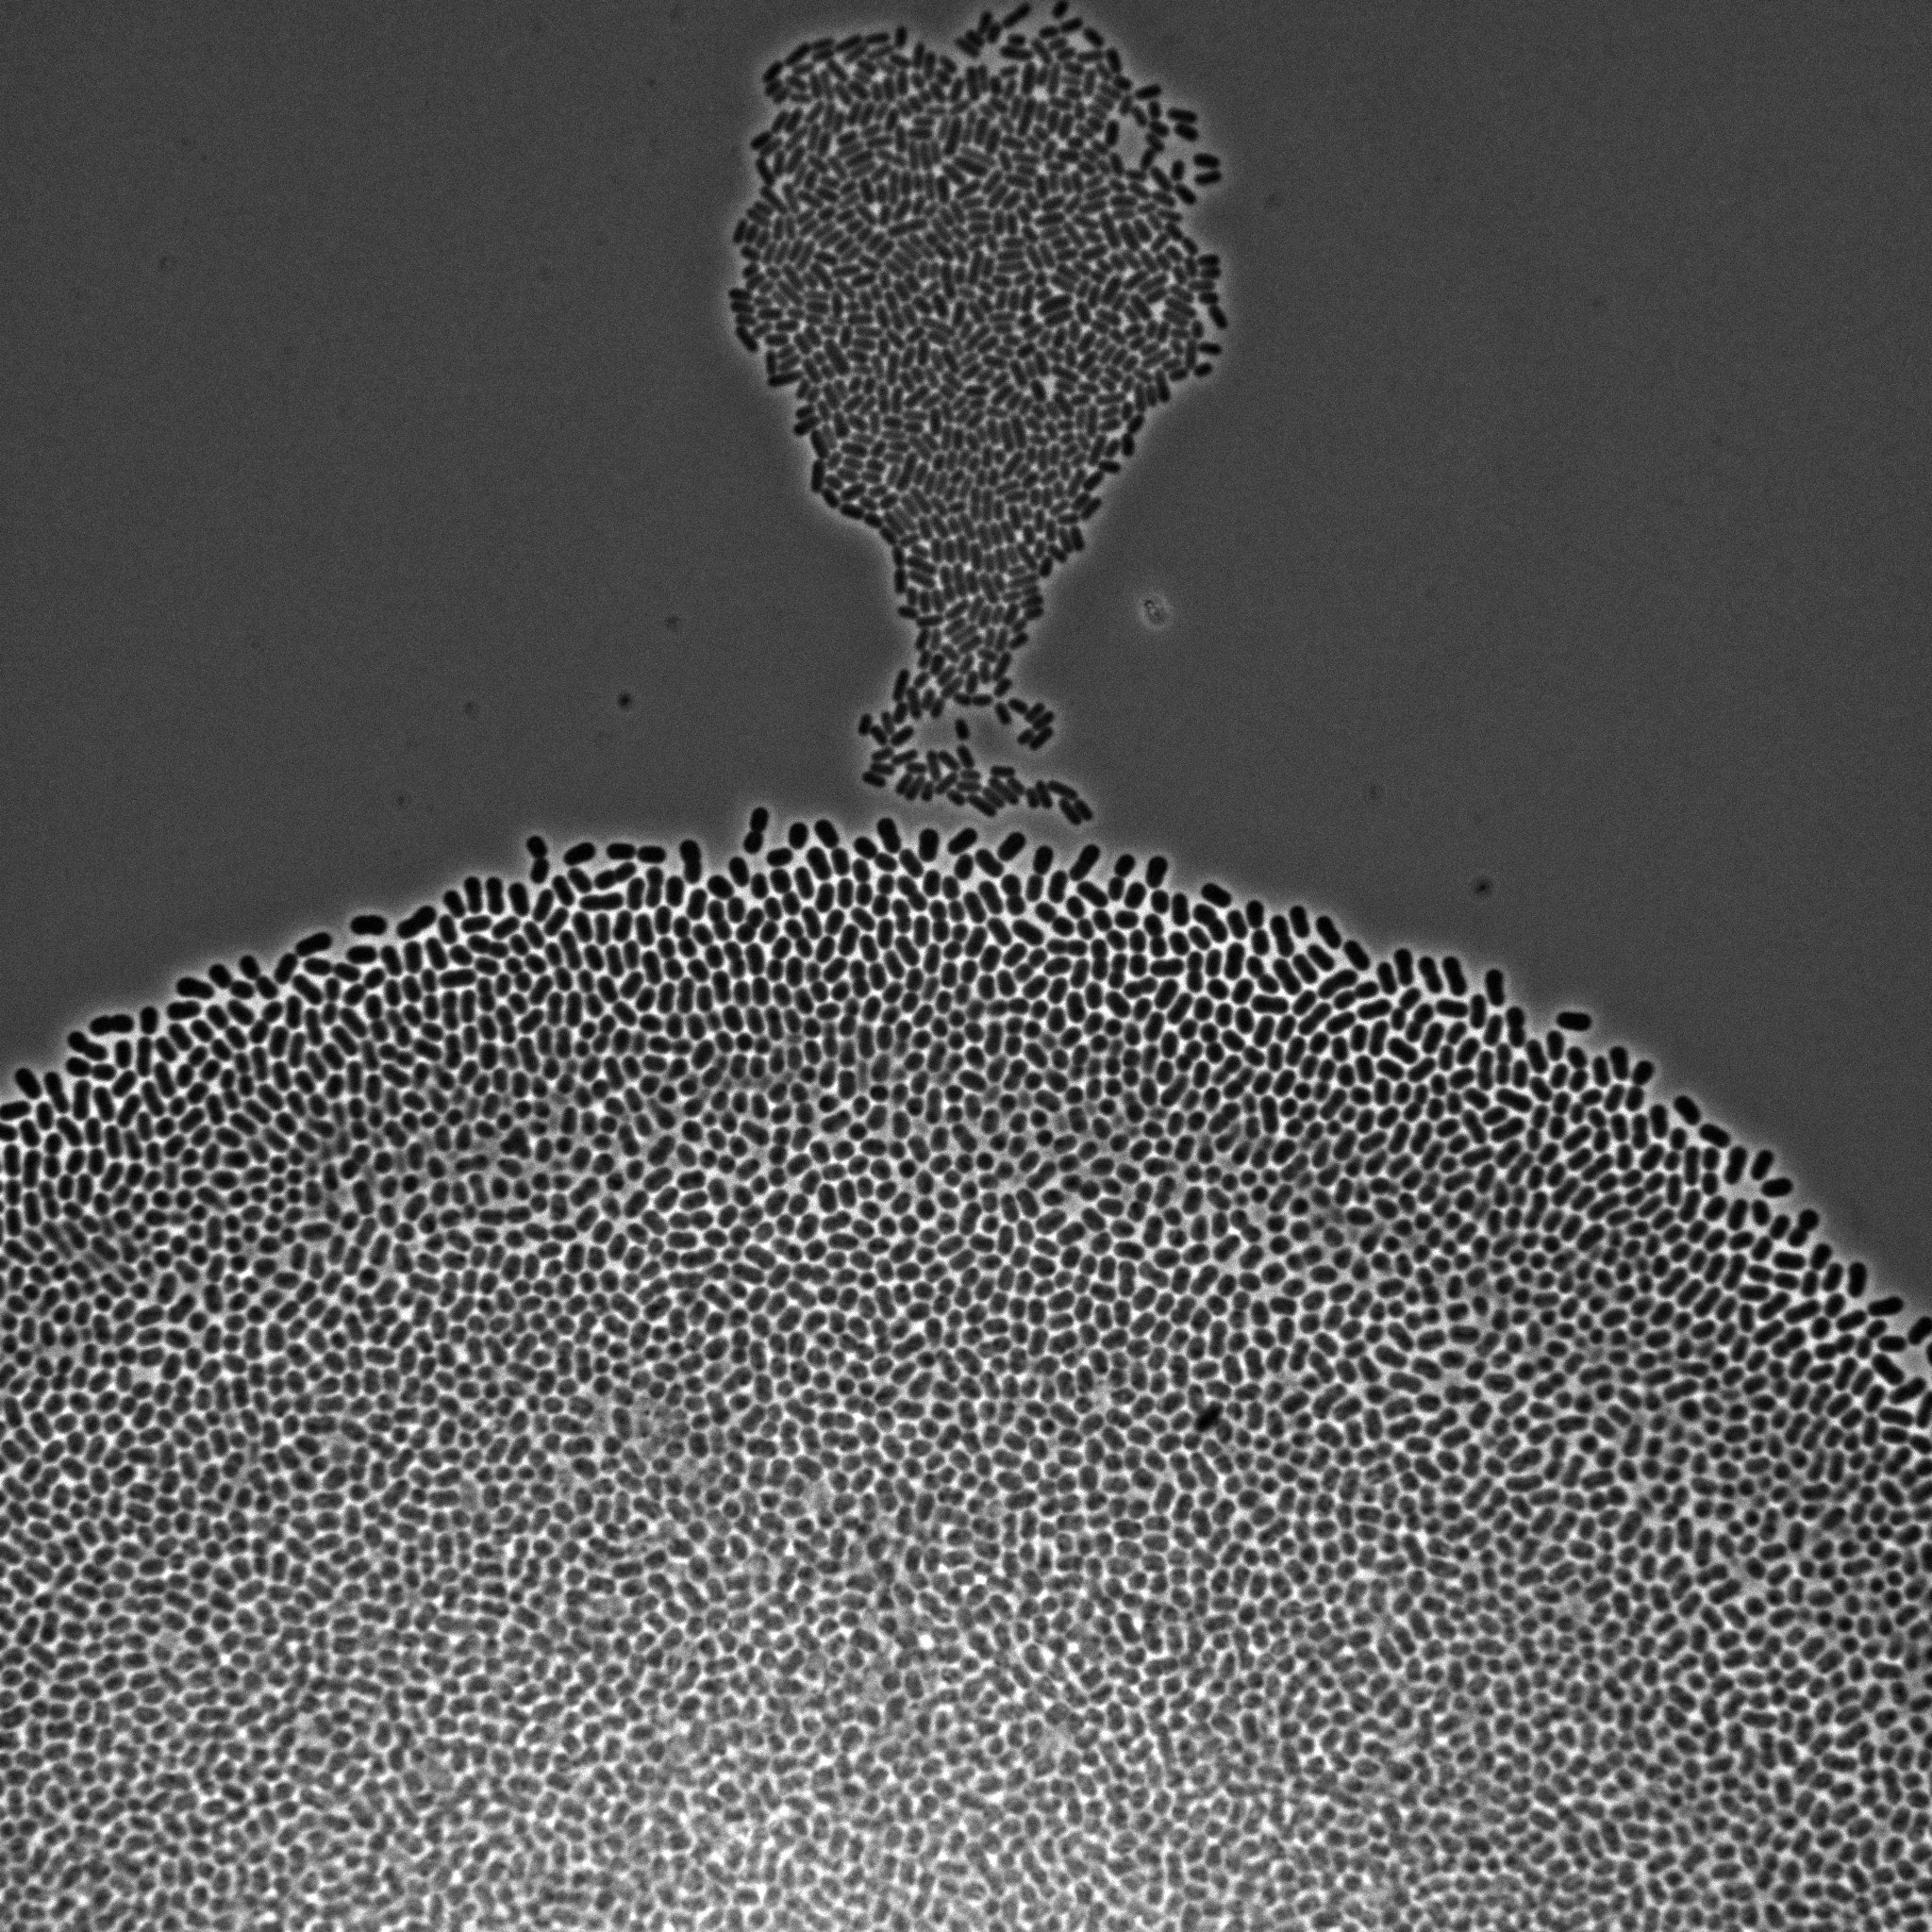 Figure 1: Microscopy image of Escherichia coli bacteria growing on a solid nutrient medium.